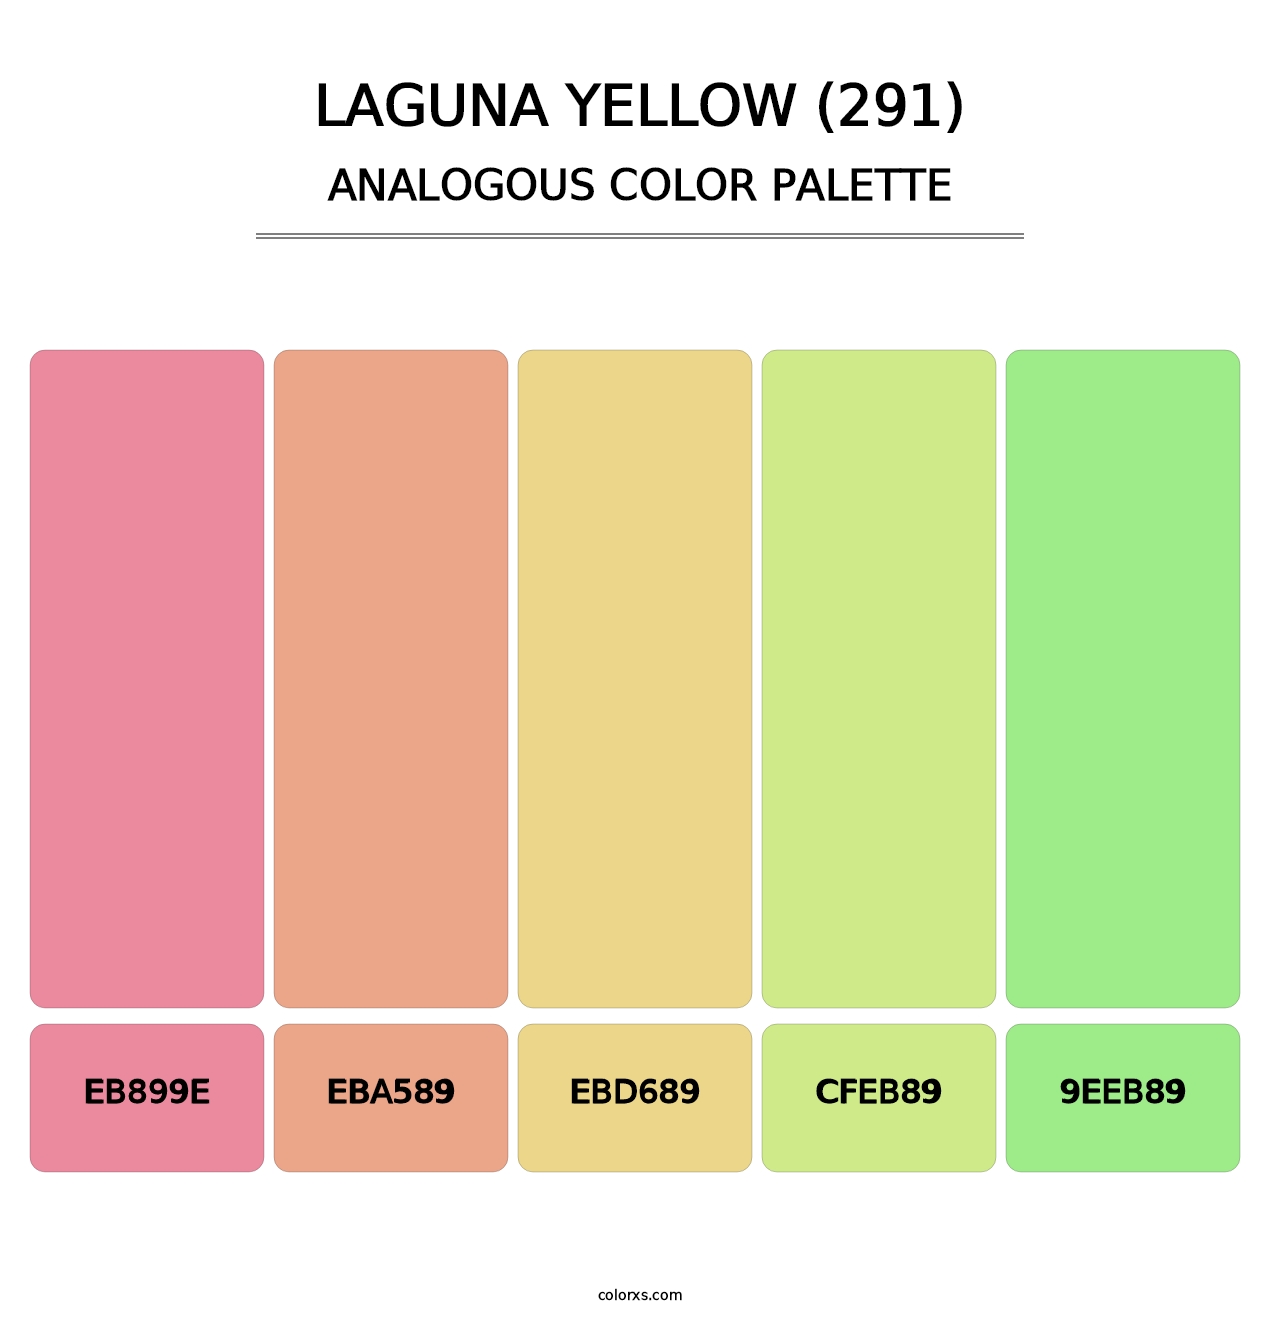 Laguna Yellow (291) - Analogous Color Palette